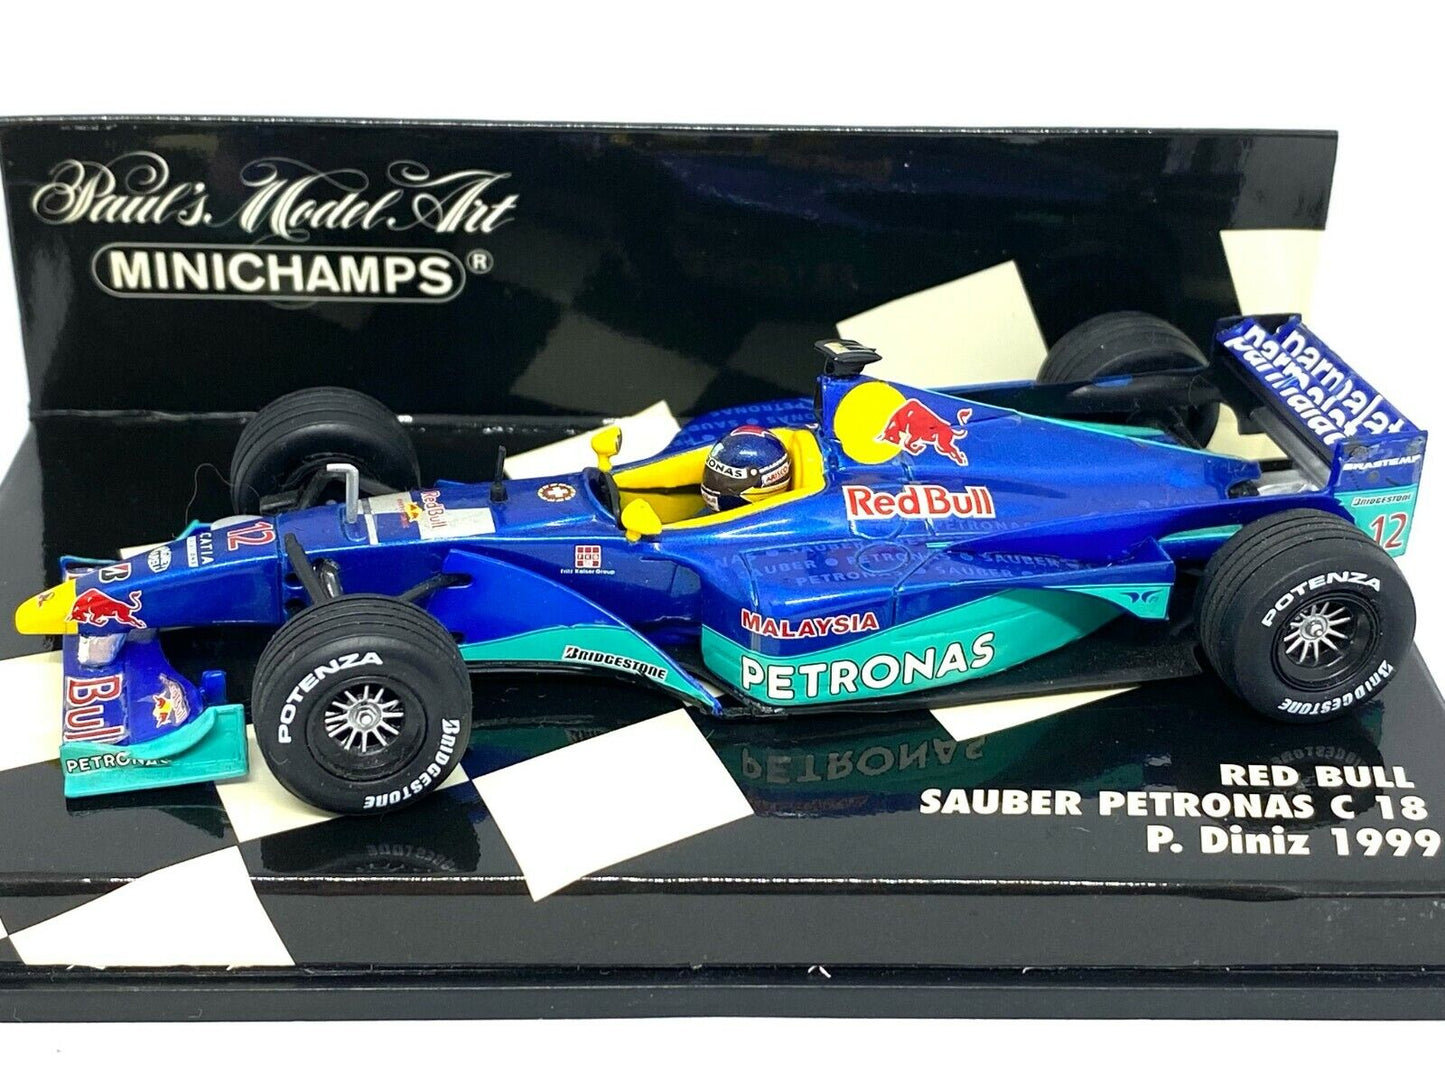 Minichamps 1:43 Sauber Petronas C18 Red Bull #12 Formula1 1999 P.Diniz 430990012